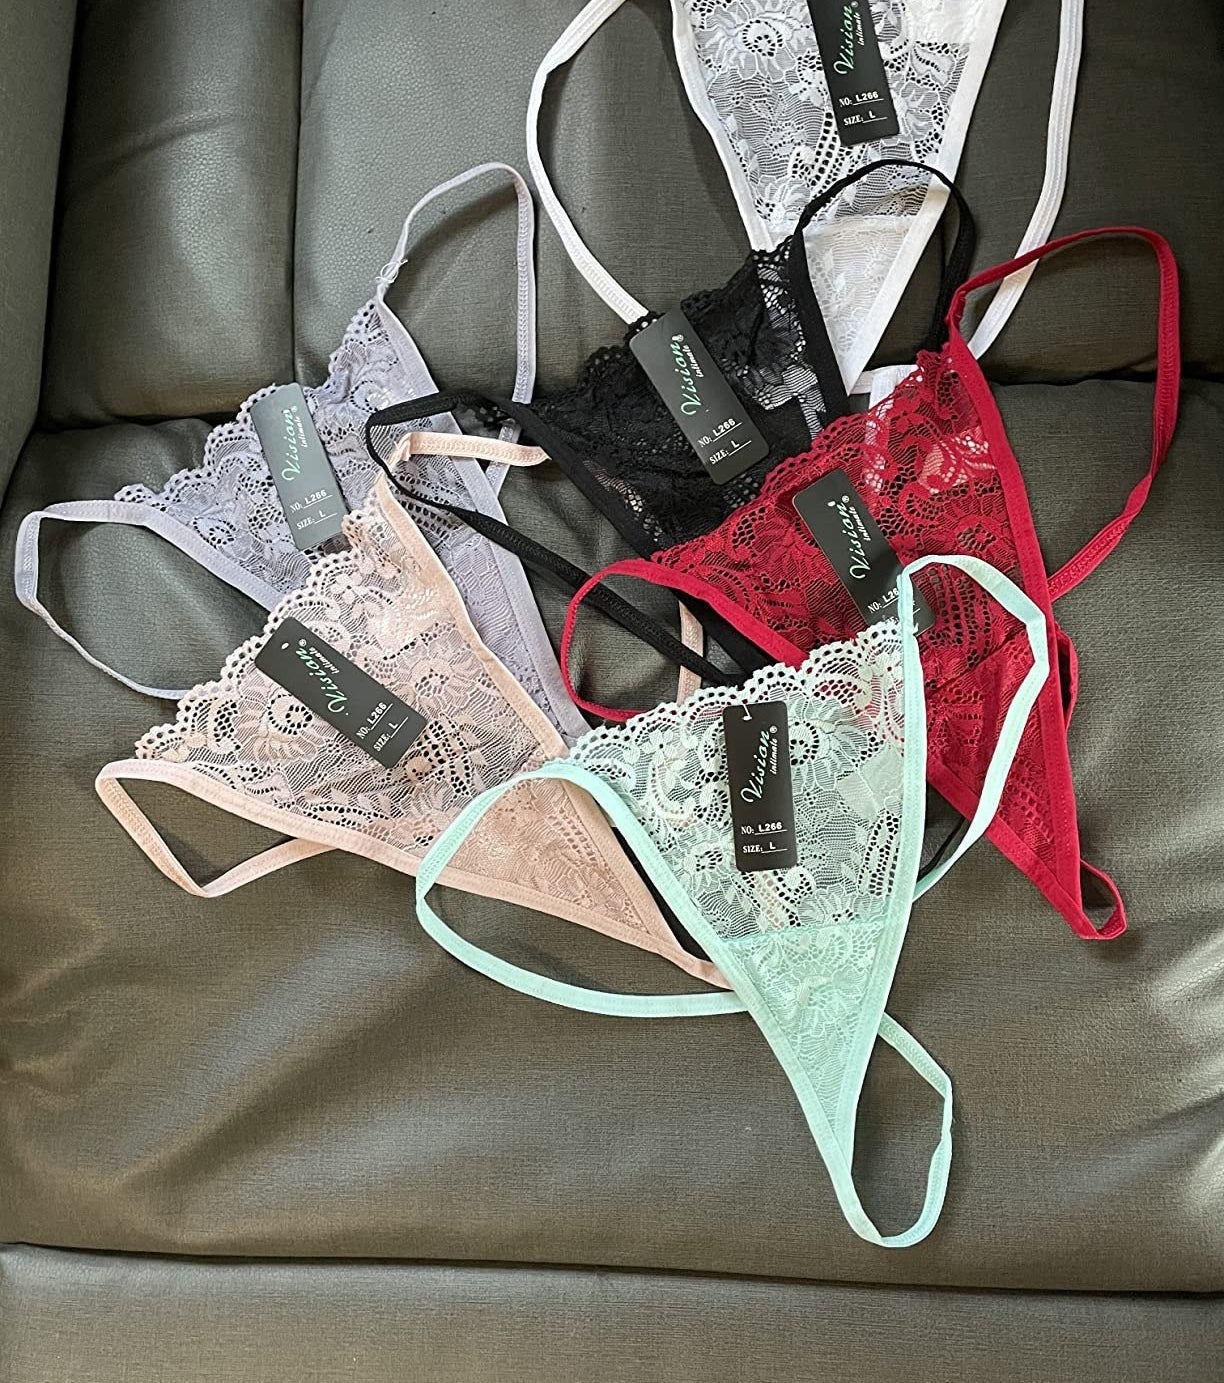 Victoria's Secret unlined 34B,36D BRA SET+thong+s,L TEDDY HOT PINK SILVER  lace